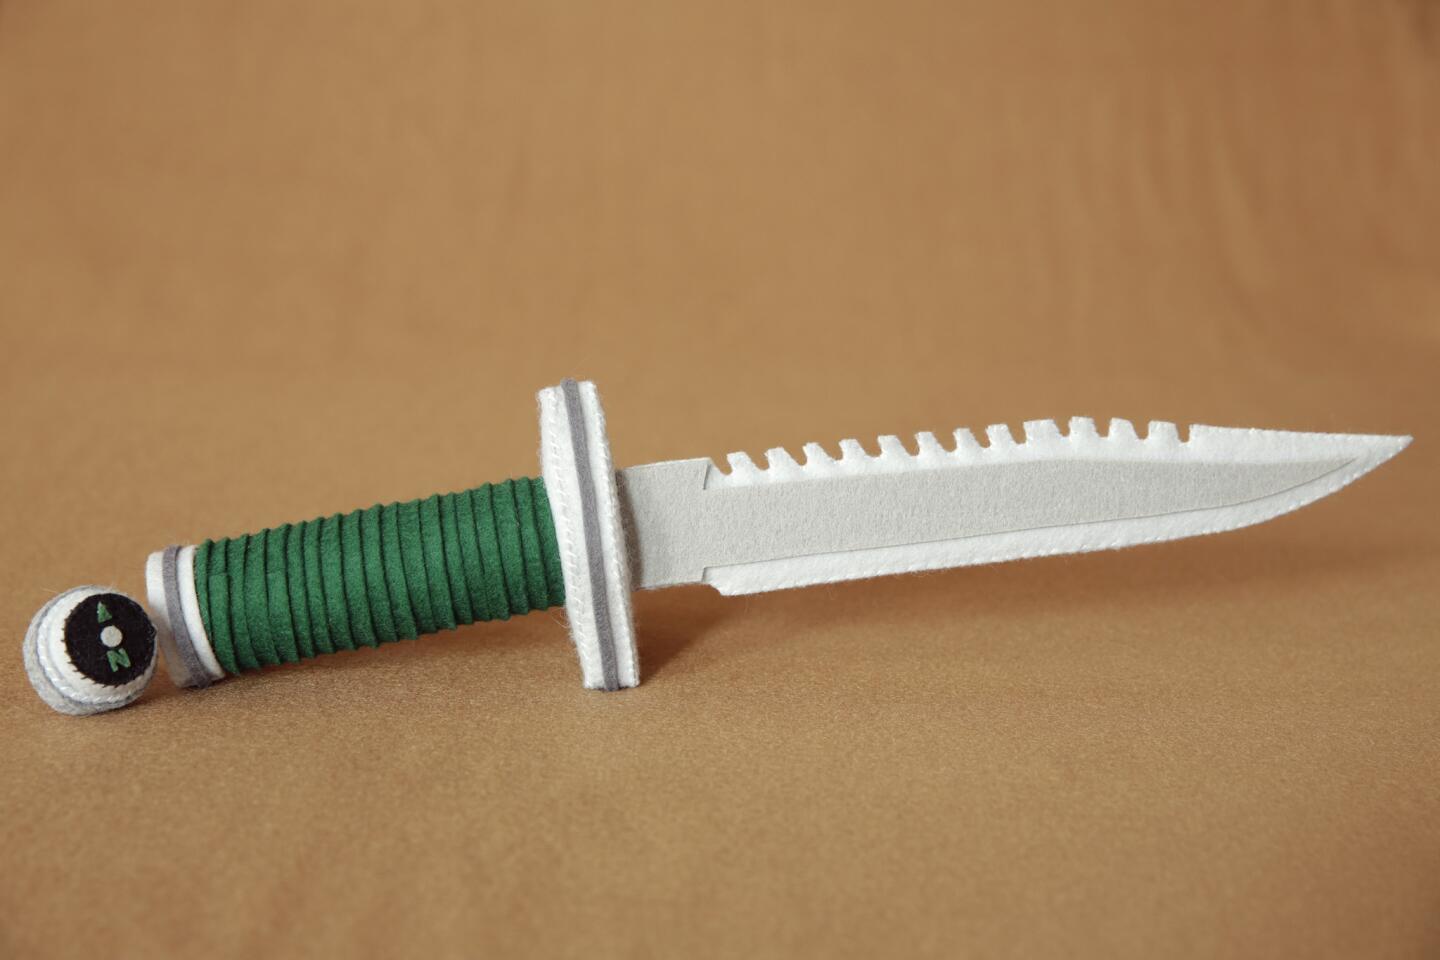 Rambo's knife